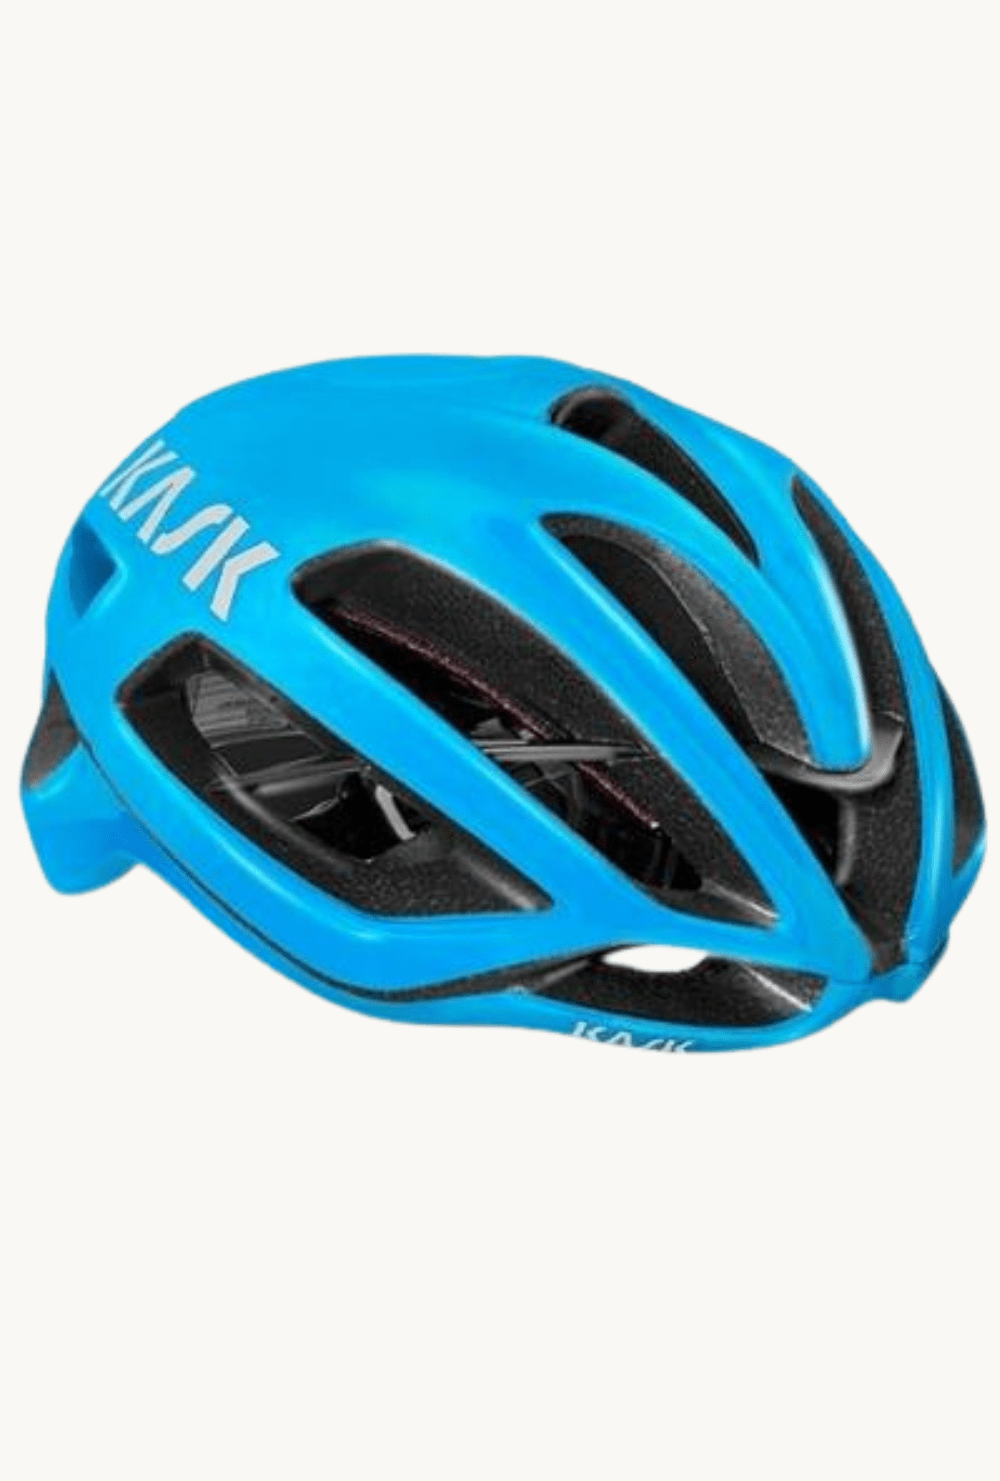 Helmet - Kask Protone Sky Bluelarge (59-62cm) / Sky Blue